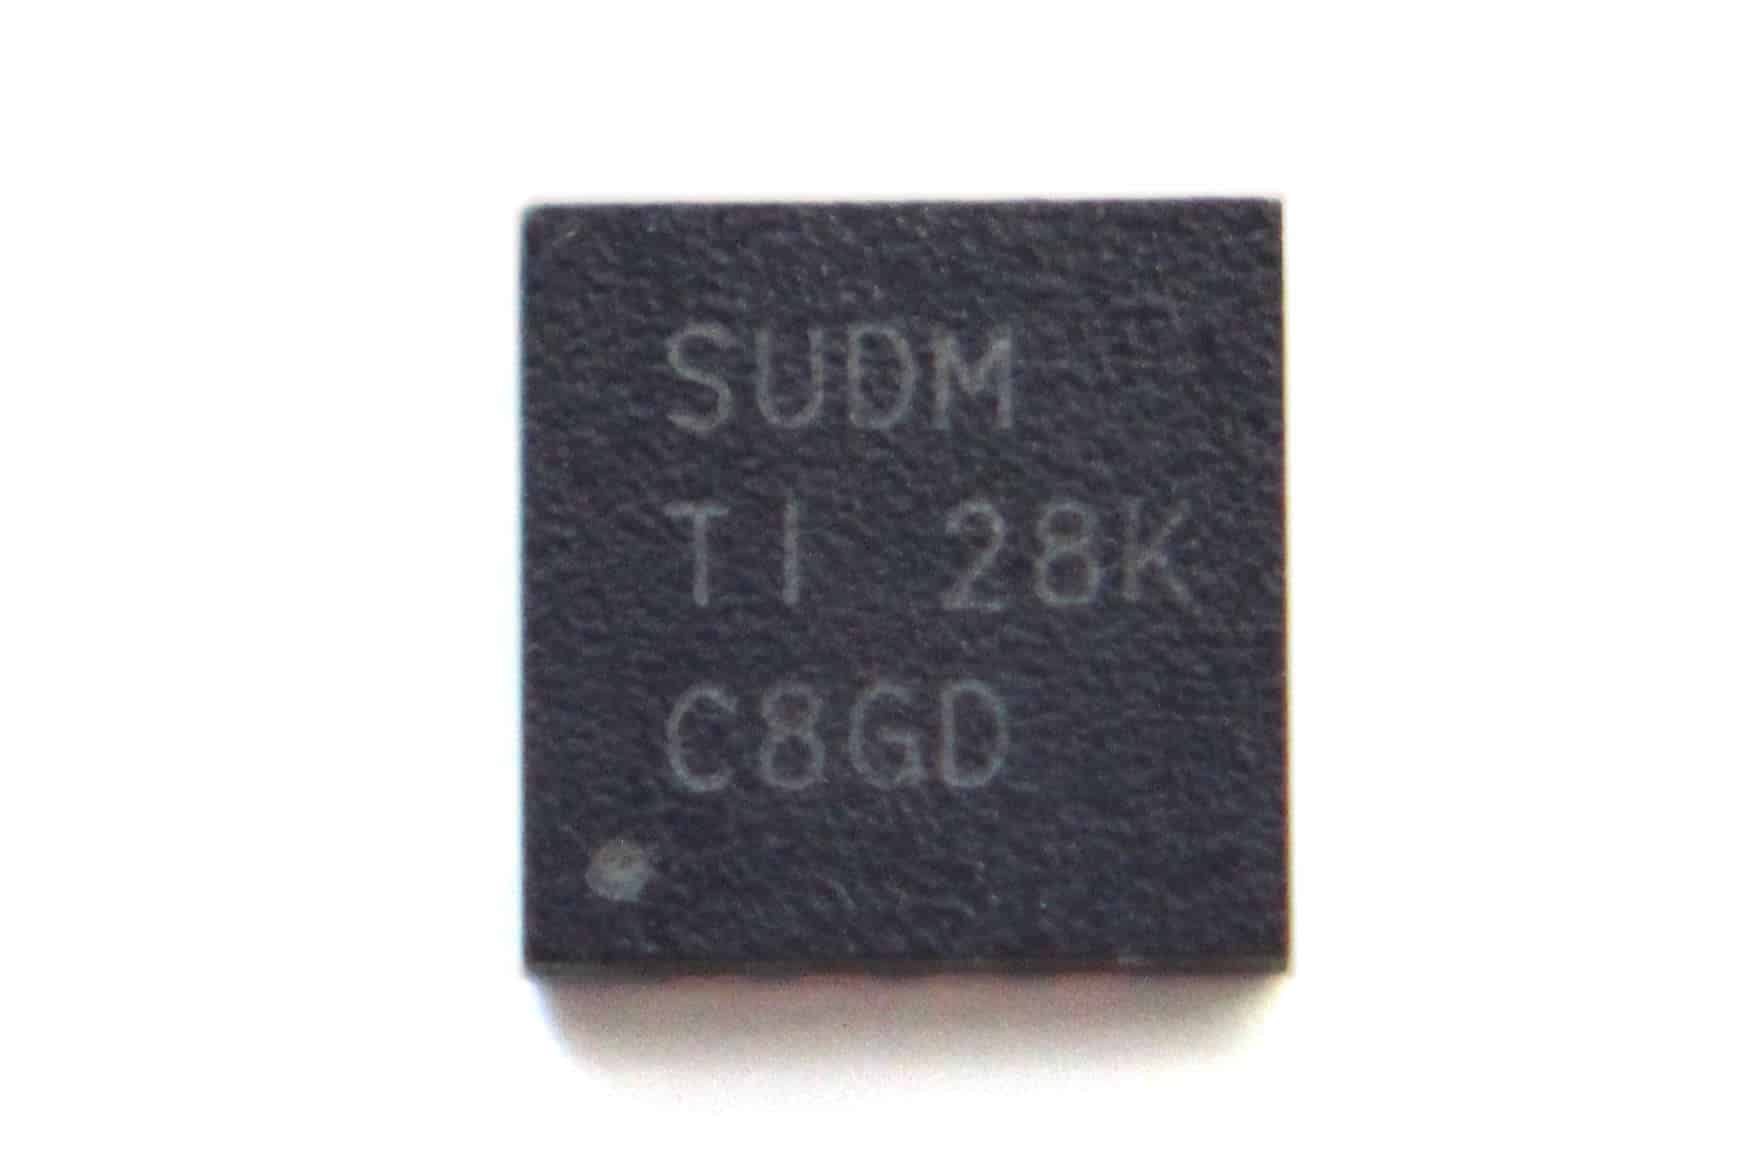 TEXAS INSTRUMENTS SN0903049 sudm TI DFN-8 IC Chip